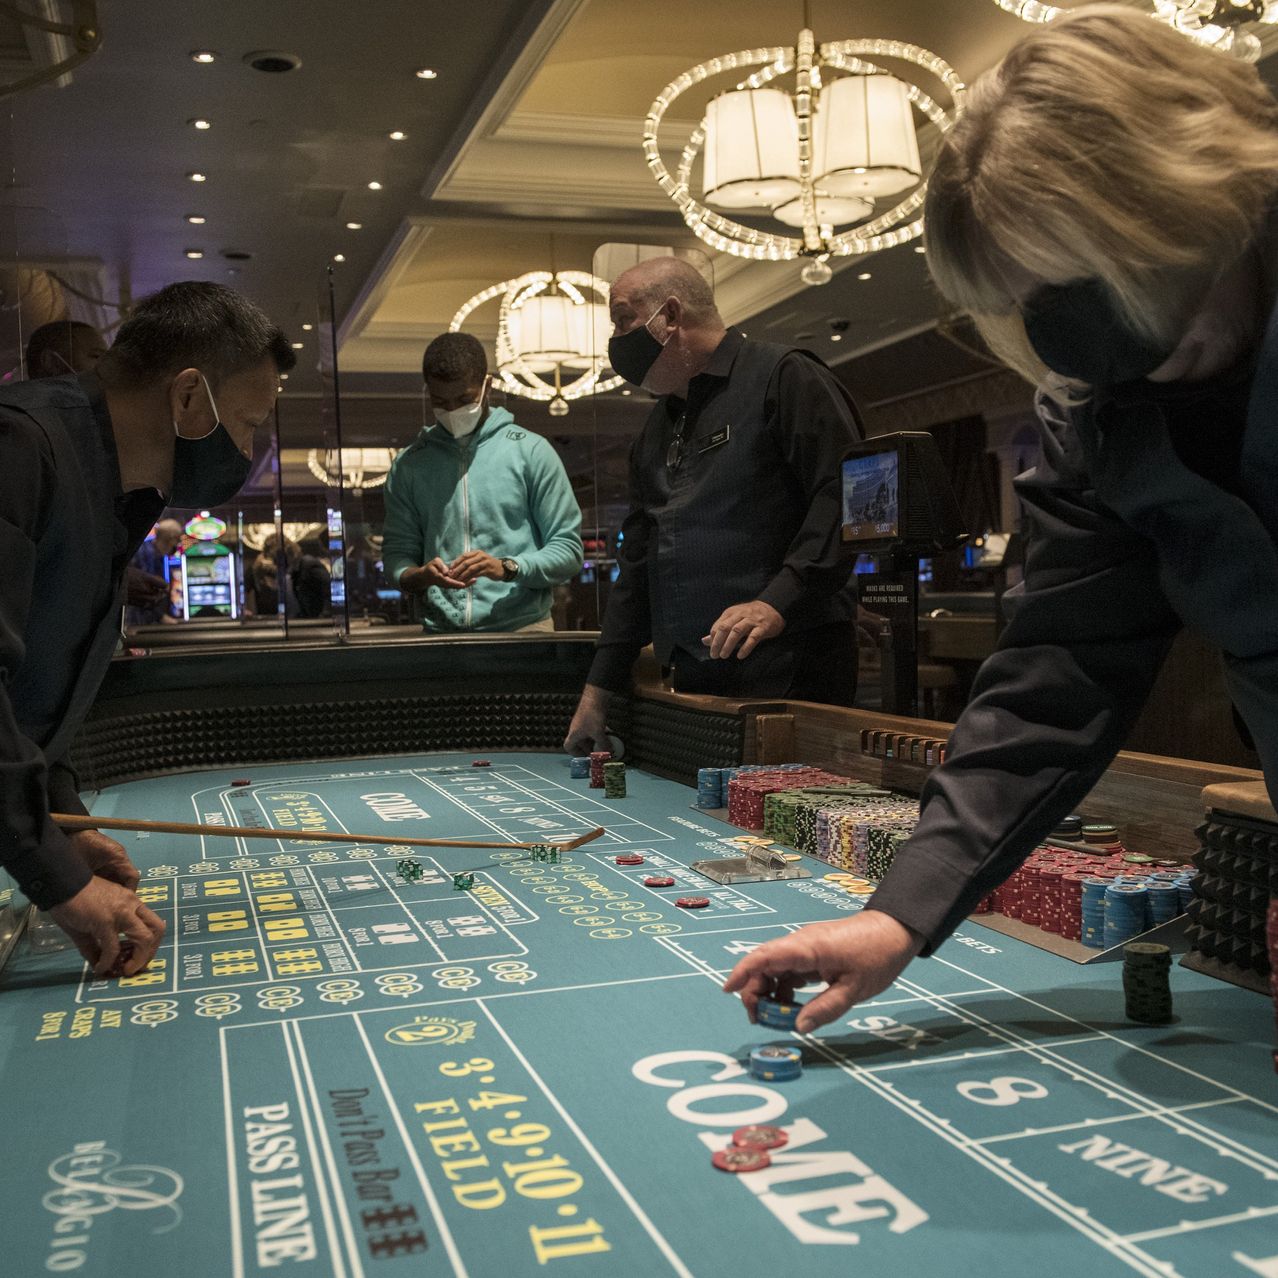 costa rica online casinos regulated in us